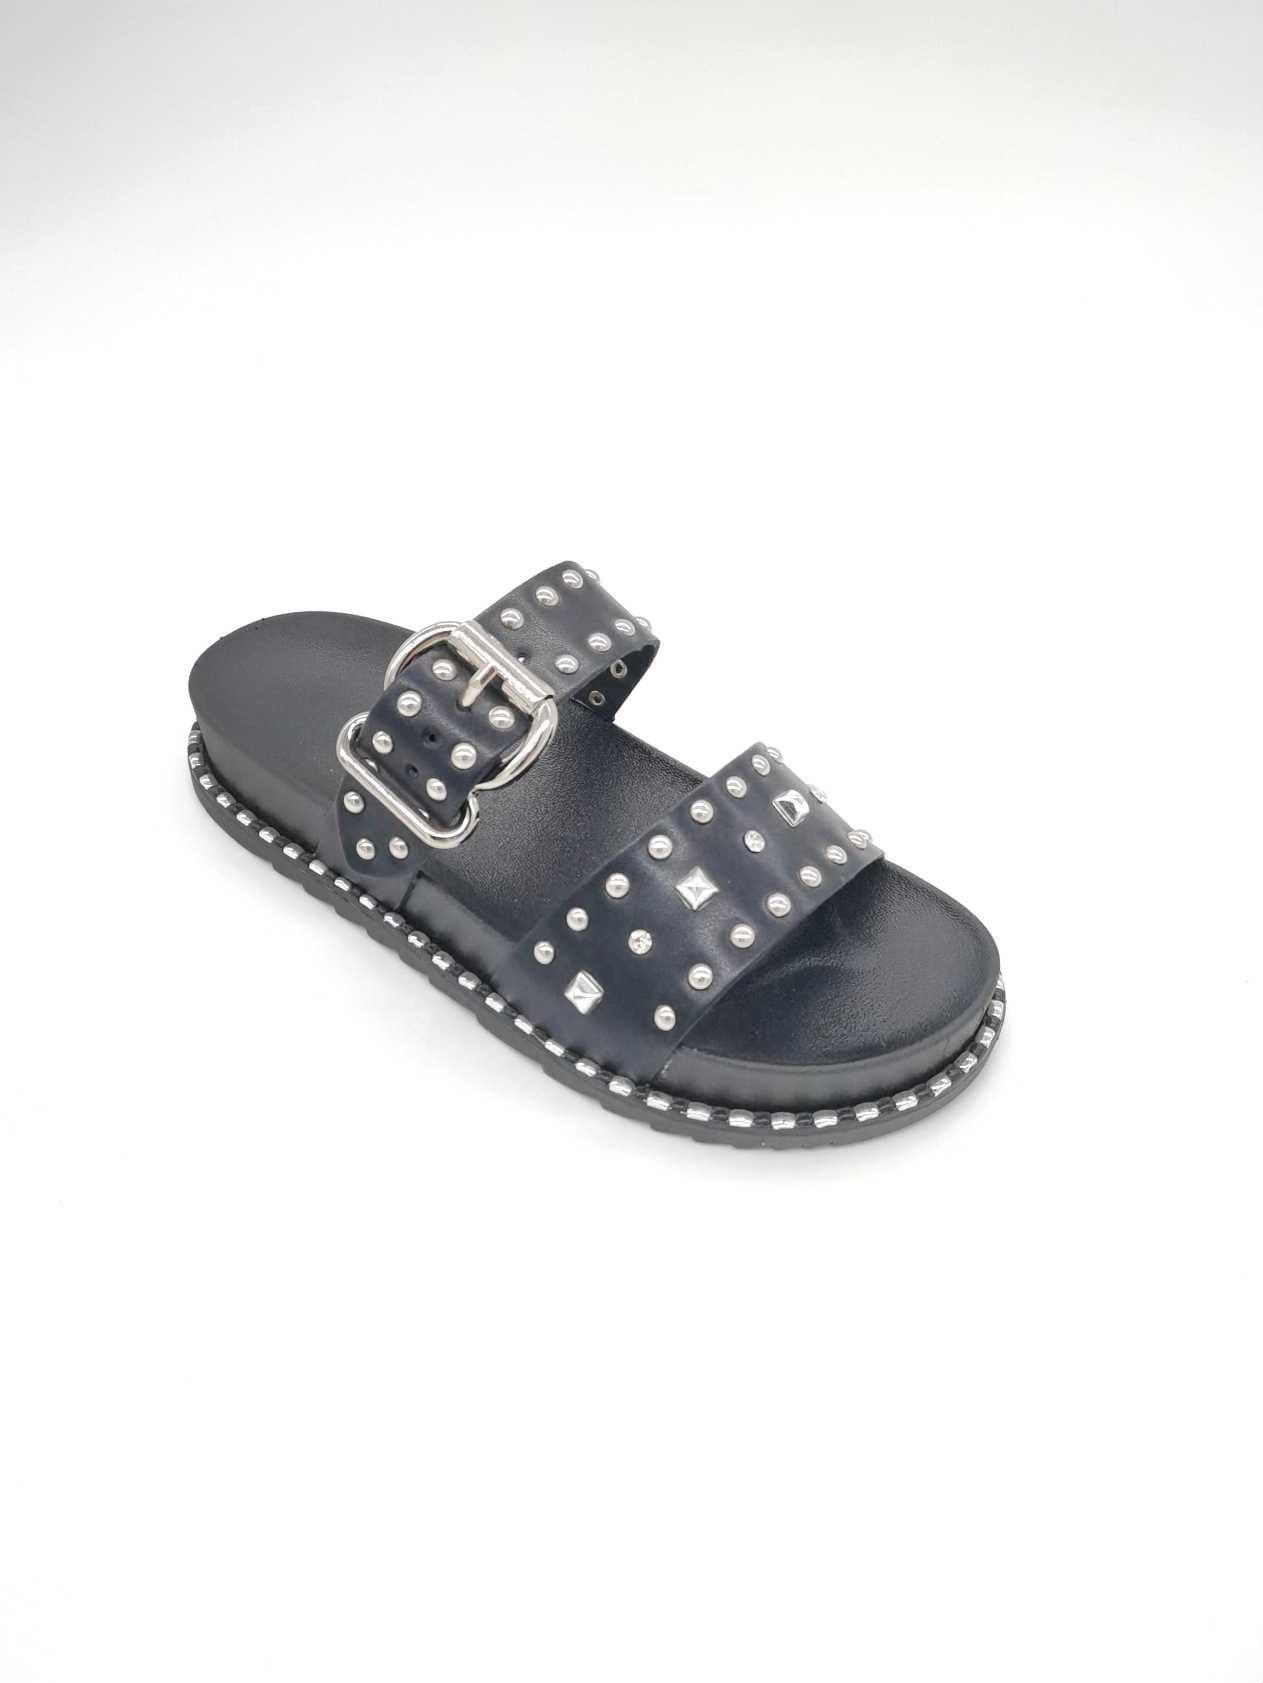 Sandals Shoes Black MULANKA 910 #c Efashion Paris